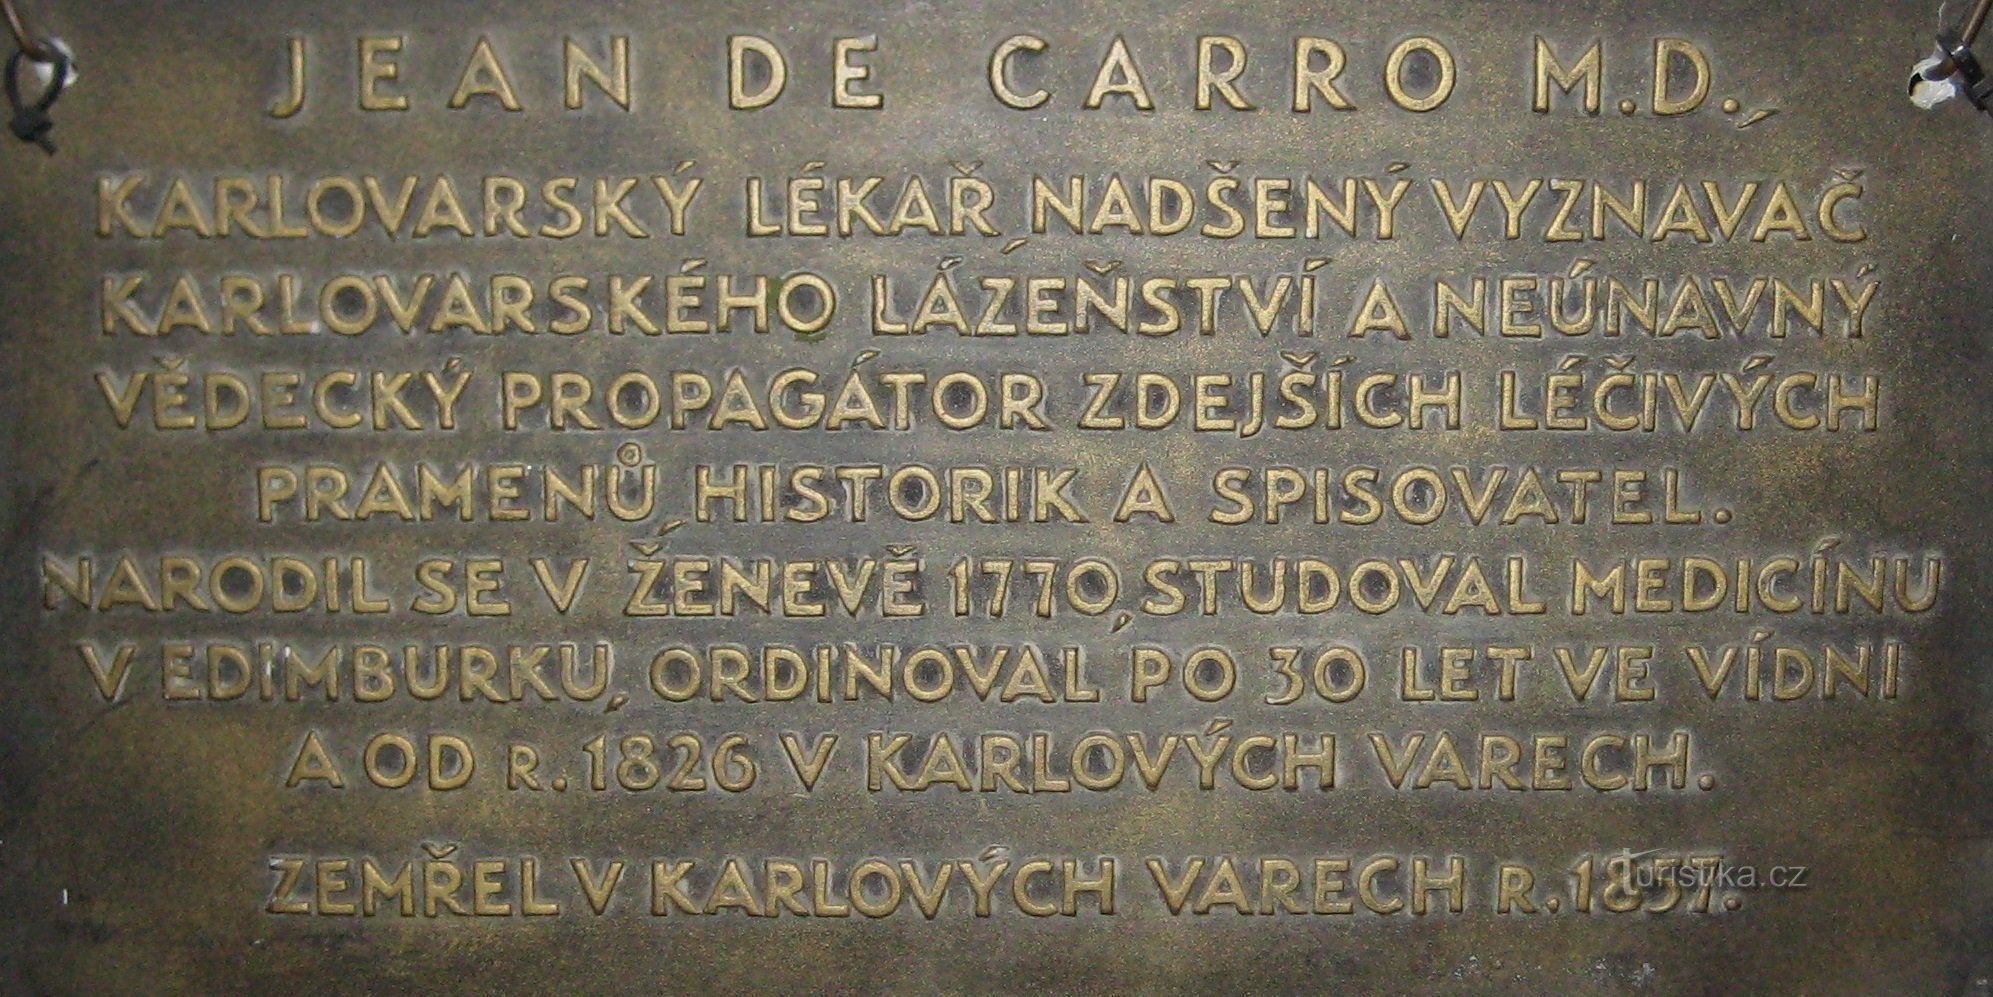 Bista Jeana de Carroa - Carske terme - Karlovy Vary